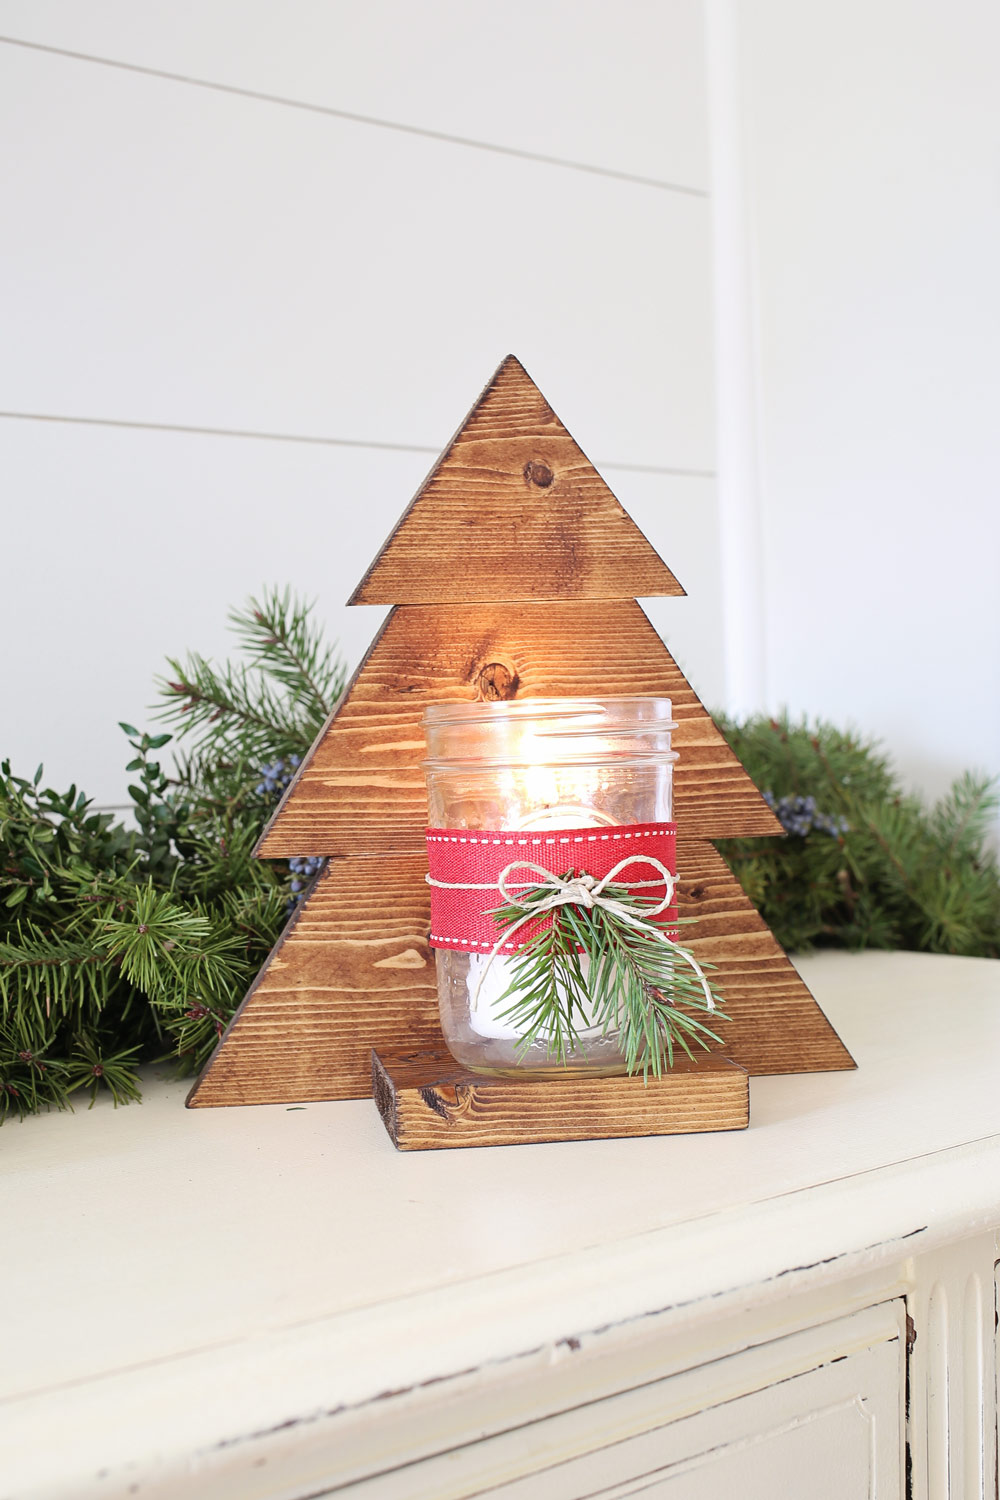 Handmade DIY Christmas Tree - Beech Wood - Bass Wood - ApolloBox